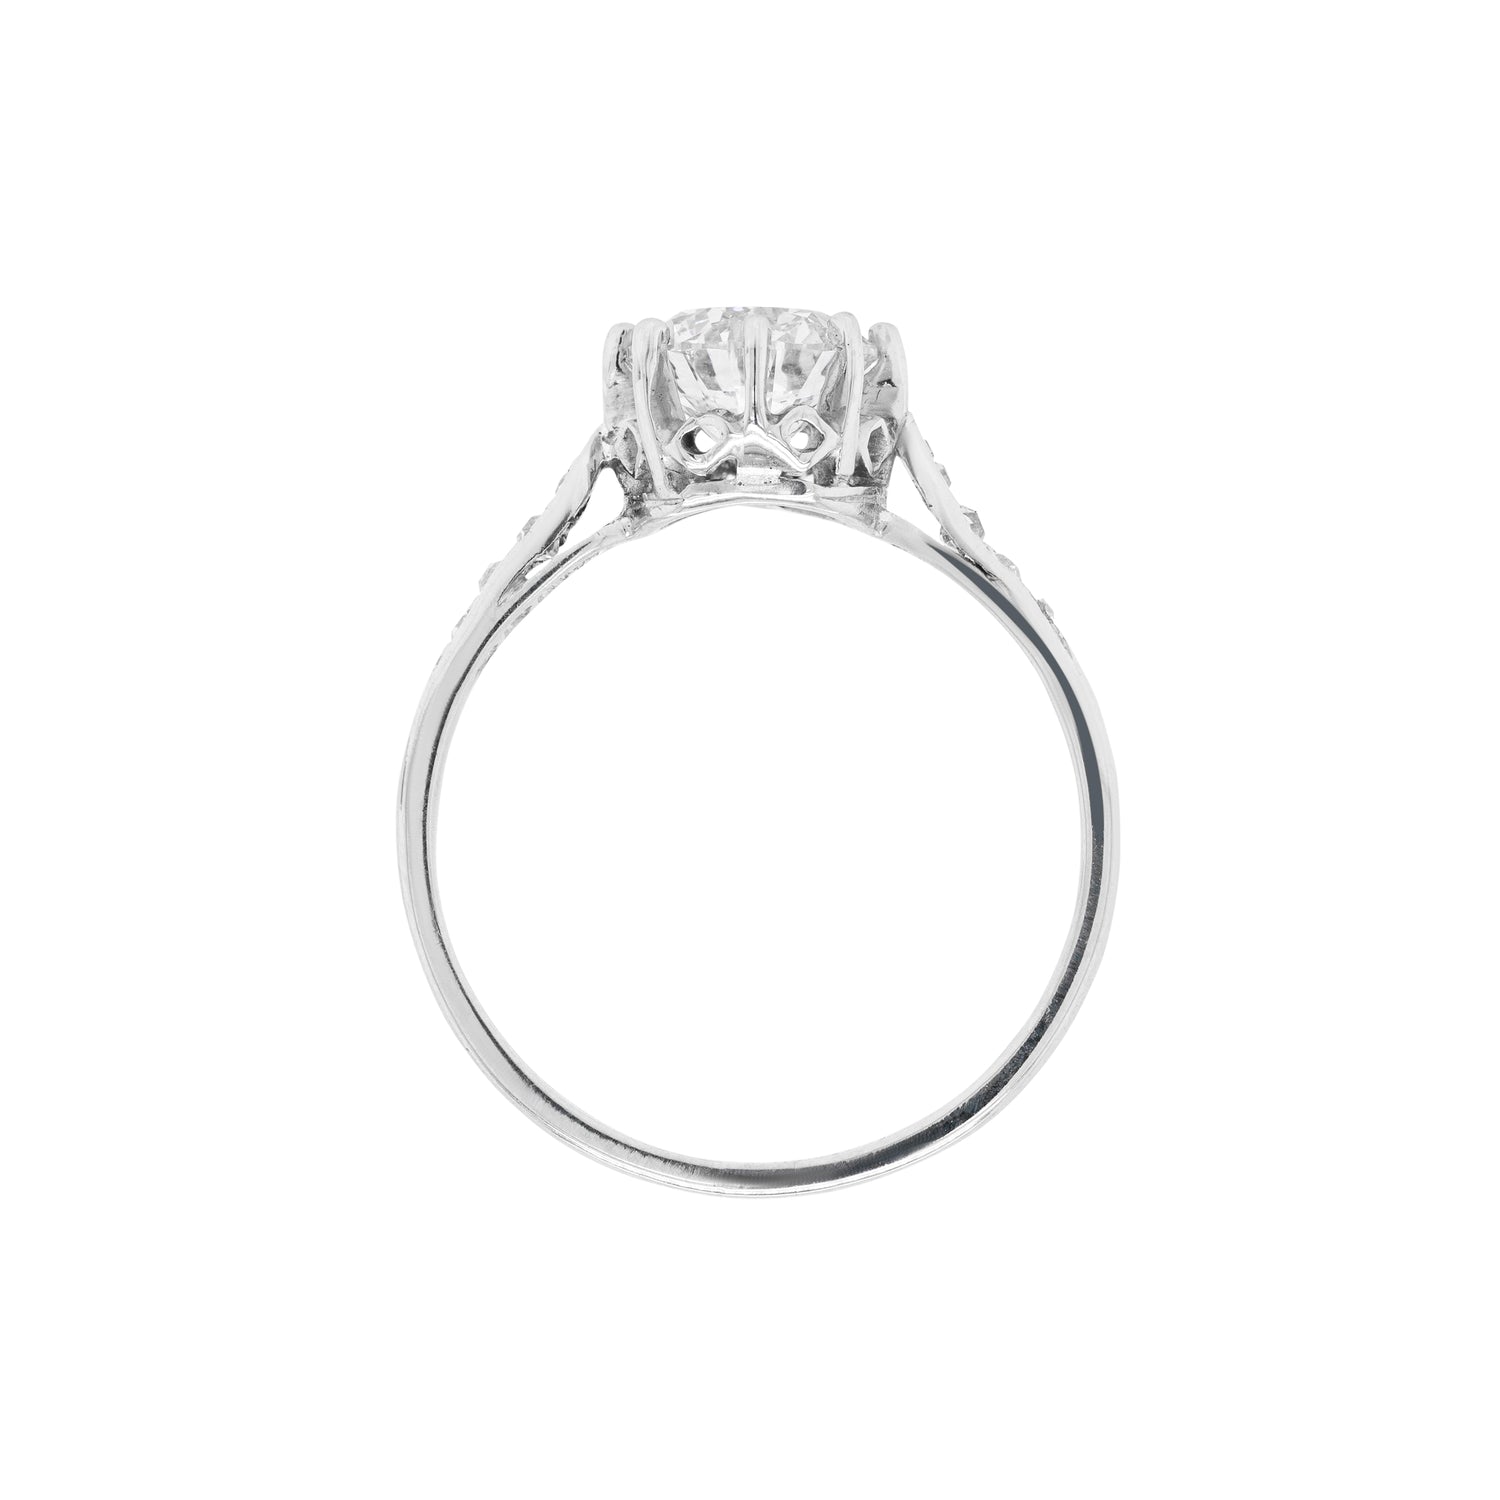 Vintage 1.37 Carat Old Cut Diamond Platinum Engagement Ring, circa 1950s